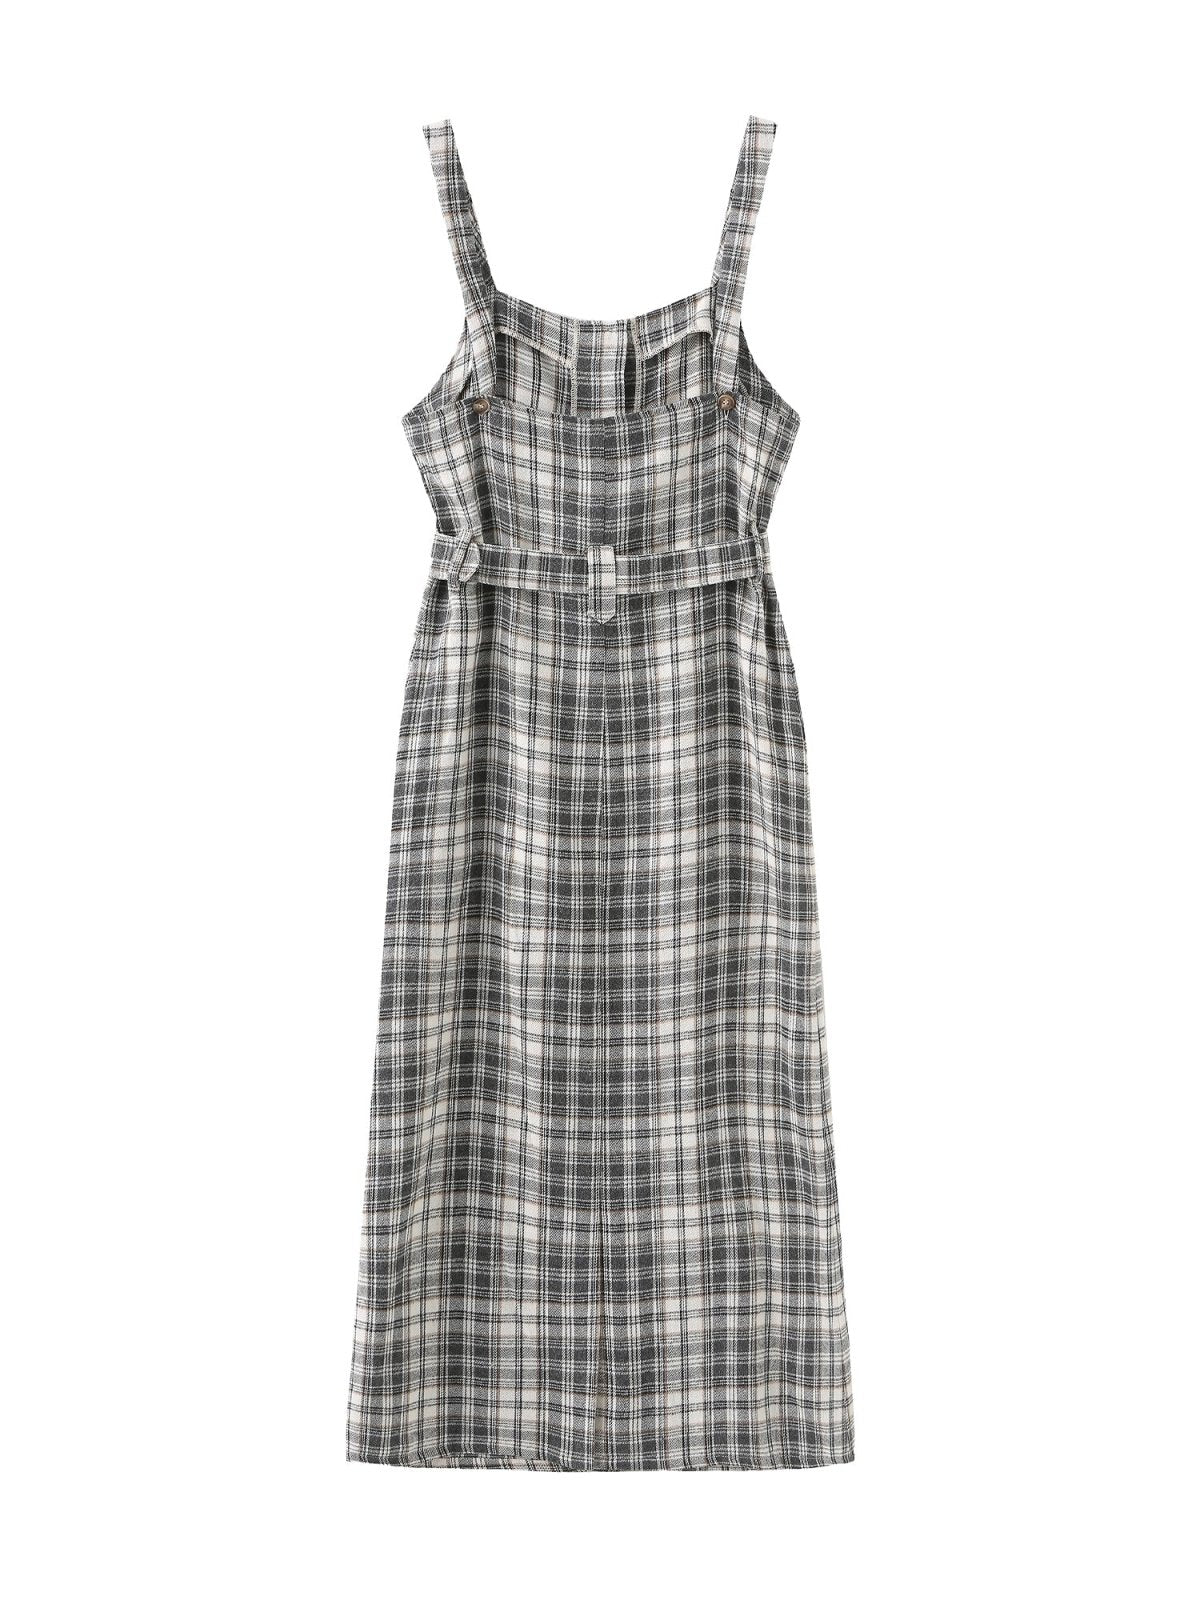 Tina Belted Sleeveless Dress - DAG-DD9895-22GrayS - Gray - S - D'ZAGE Designs